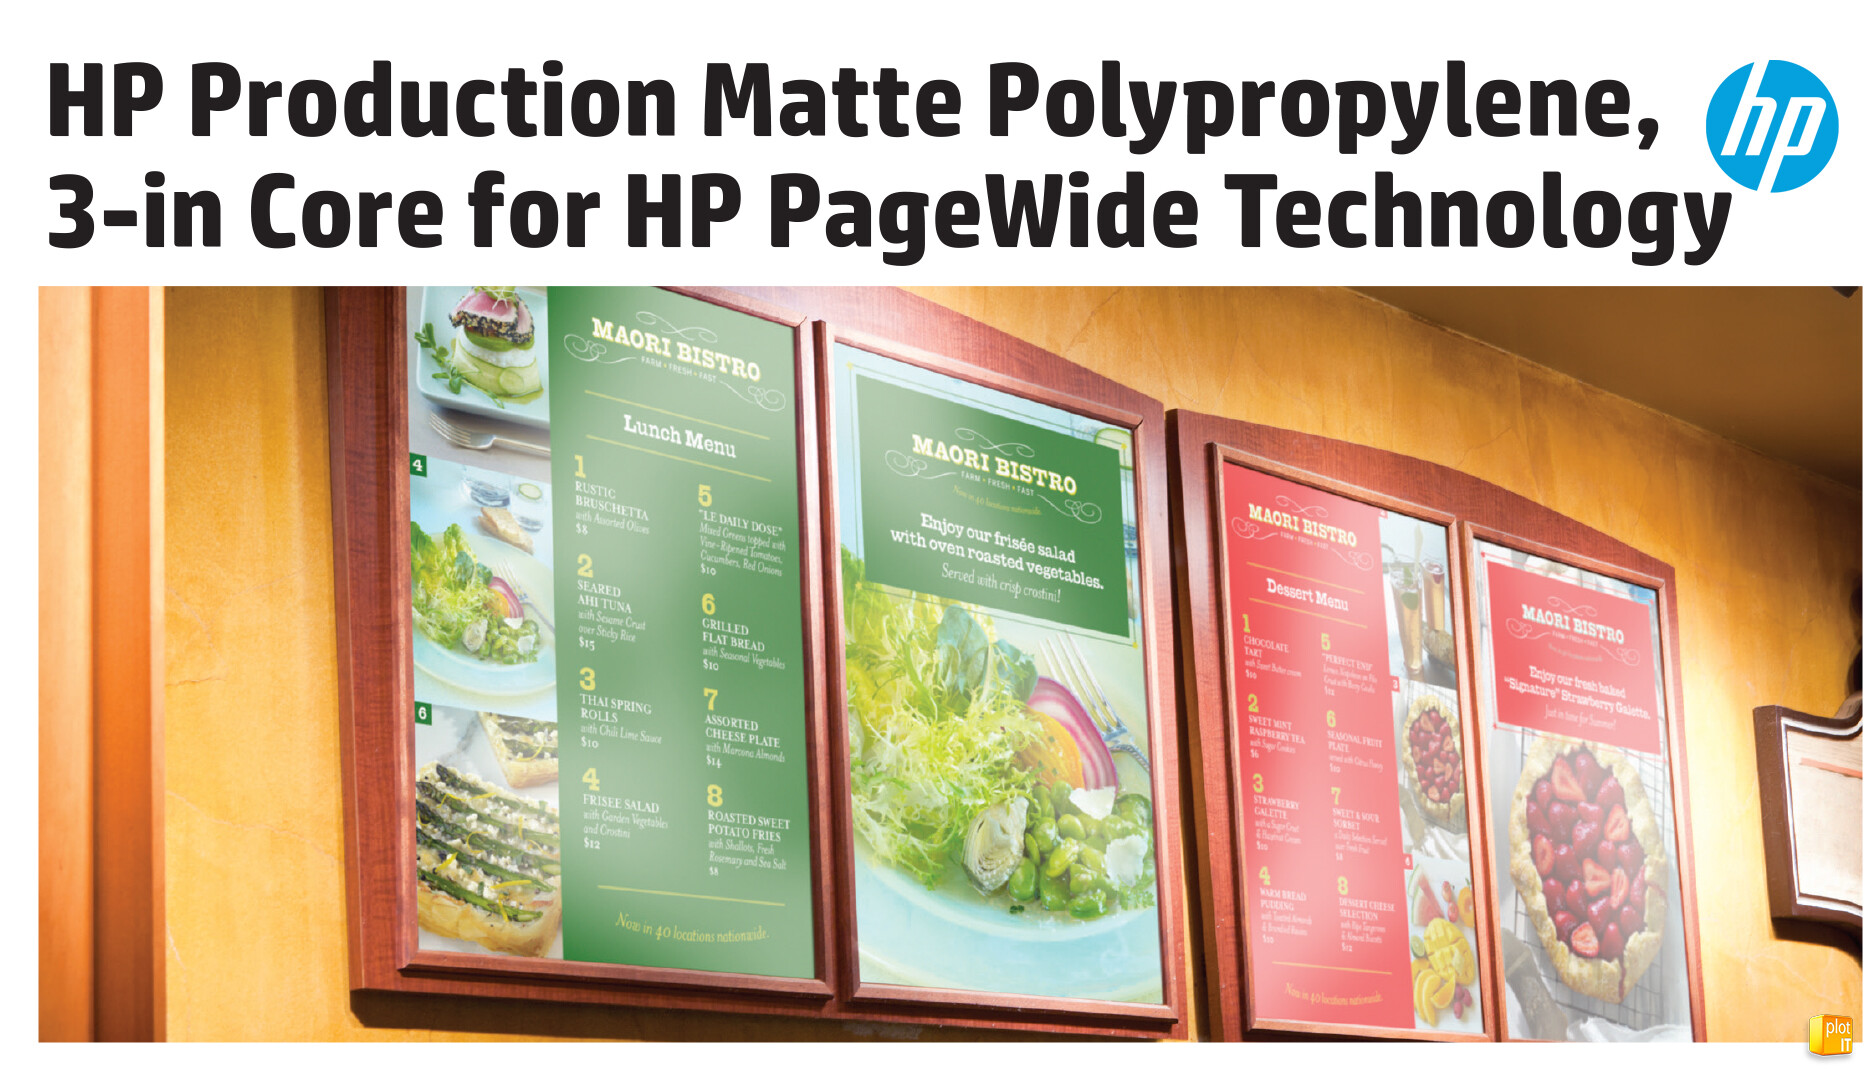 HP Production Matte Polypropylene 140g/m